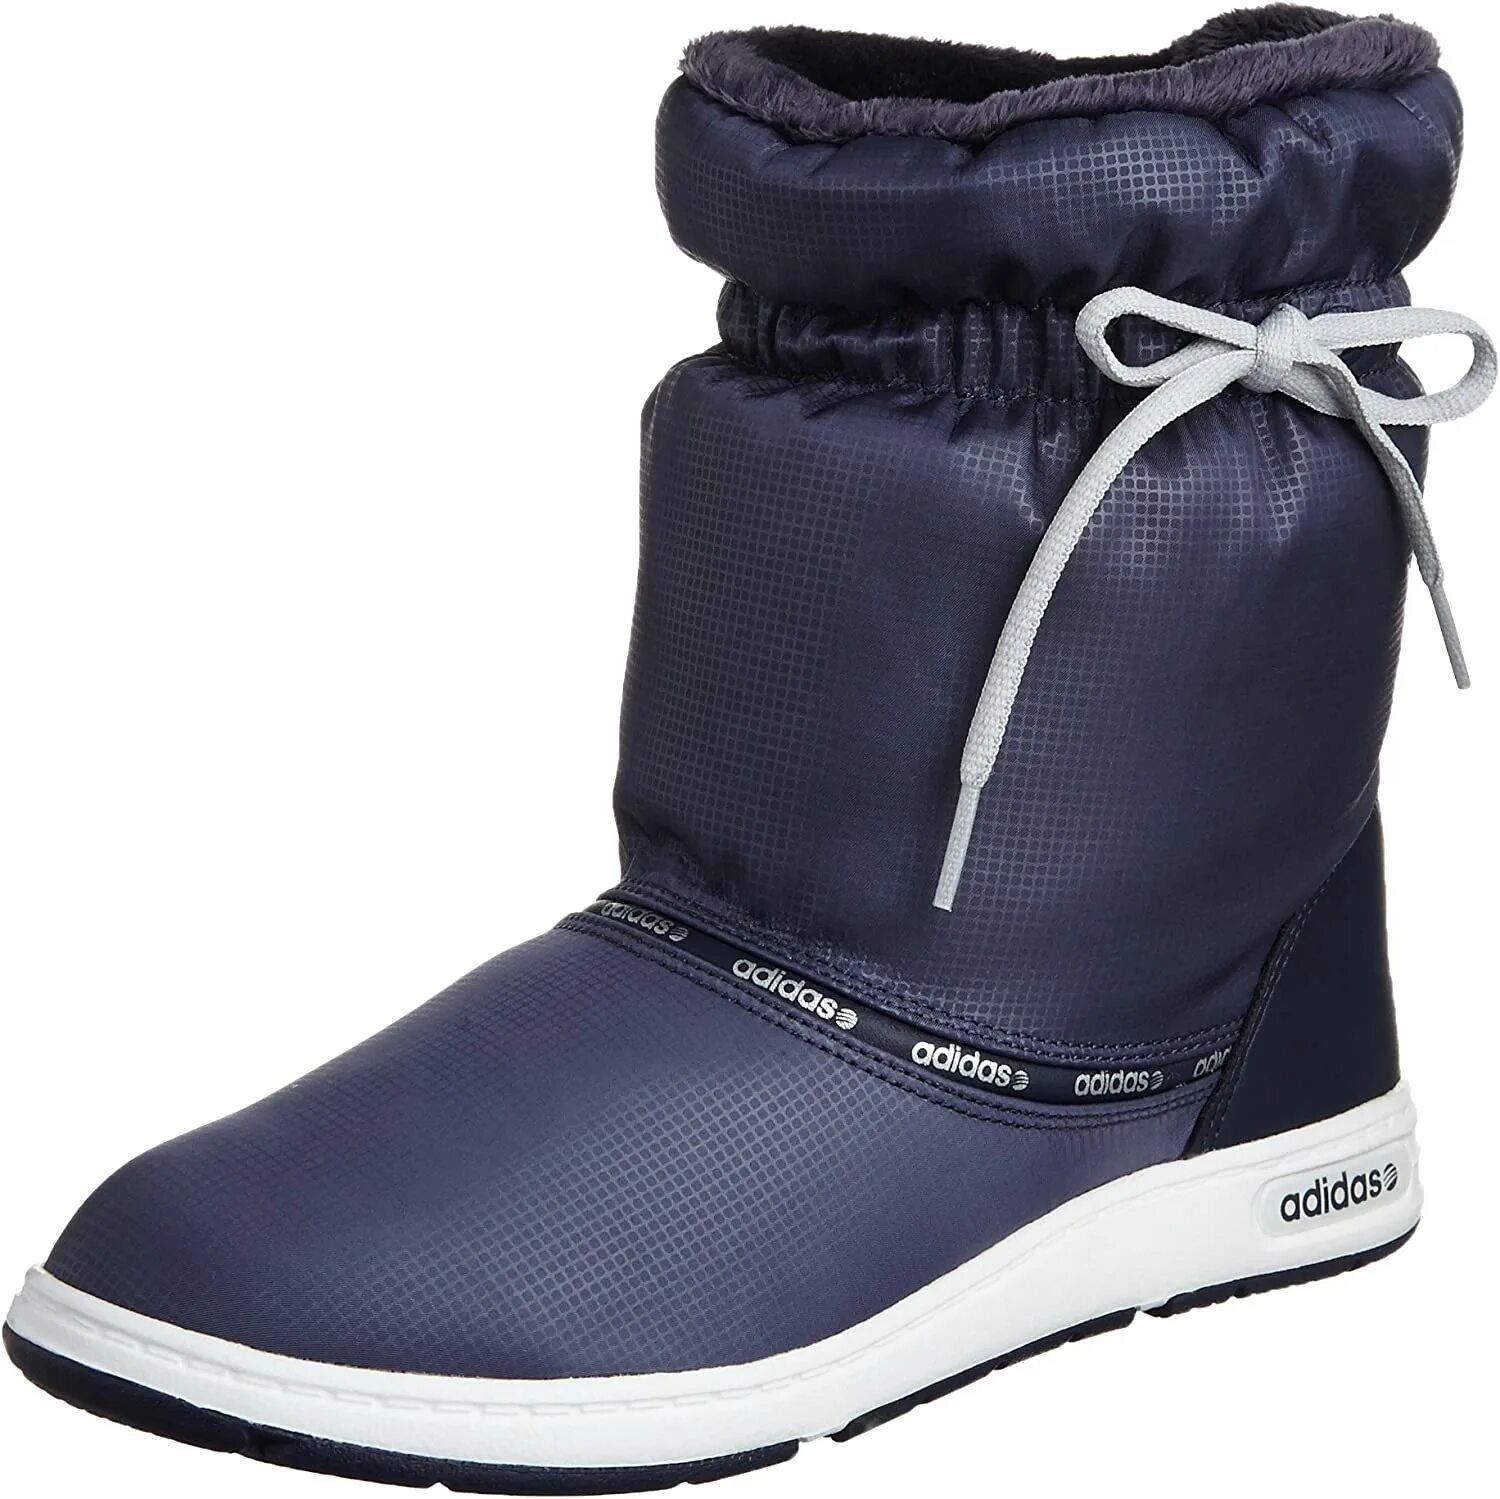 Ботинки warm. Adidas warm Comfort. Warm Comfort adidas Neo. Adidas Neo warm Comfort Boot w. Сапоги adidas Neo Comfort.